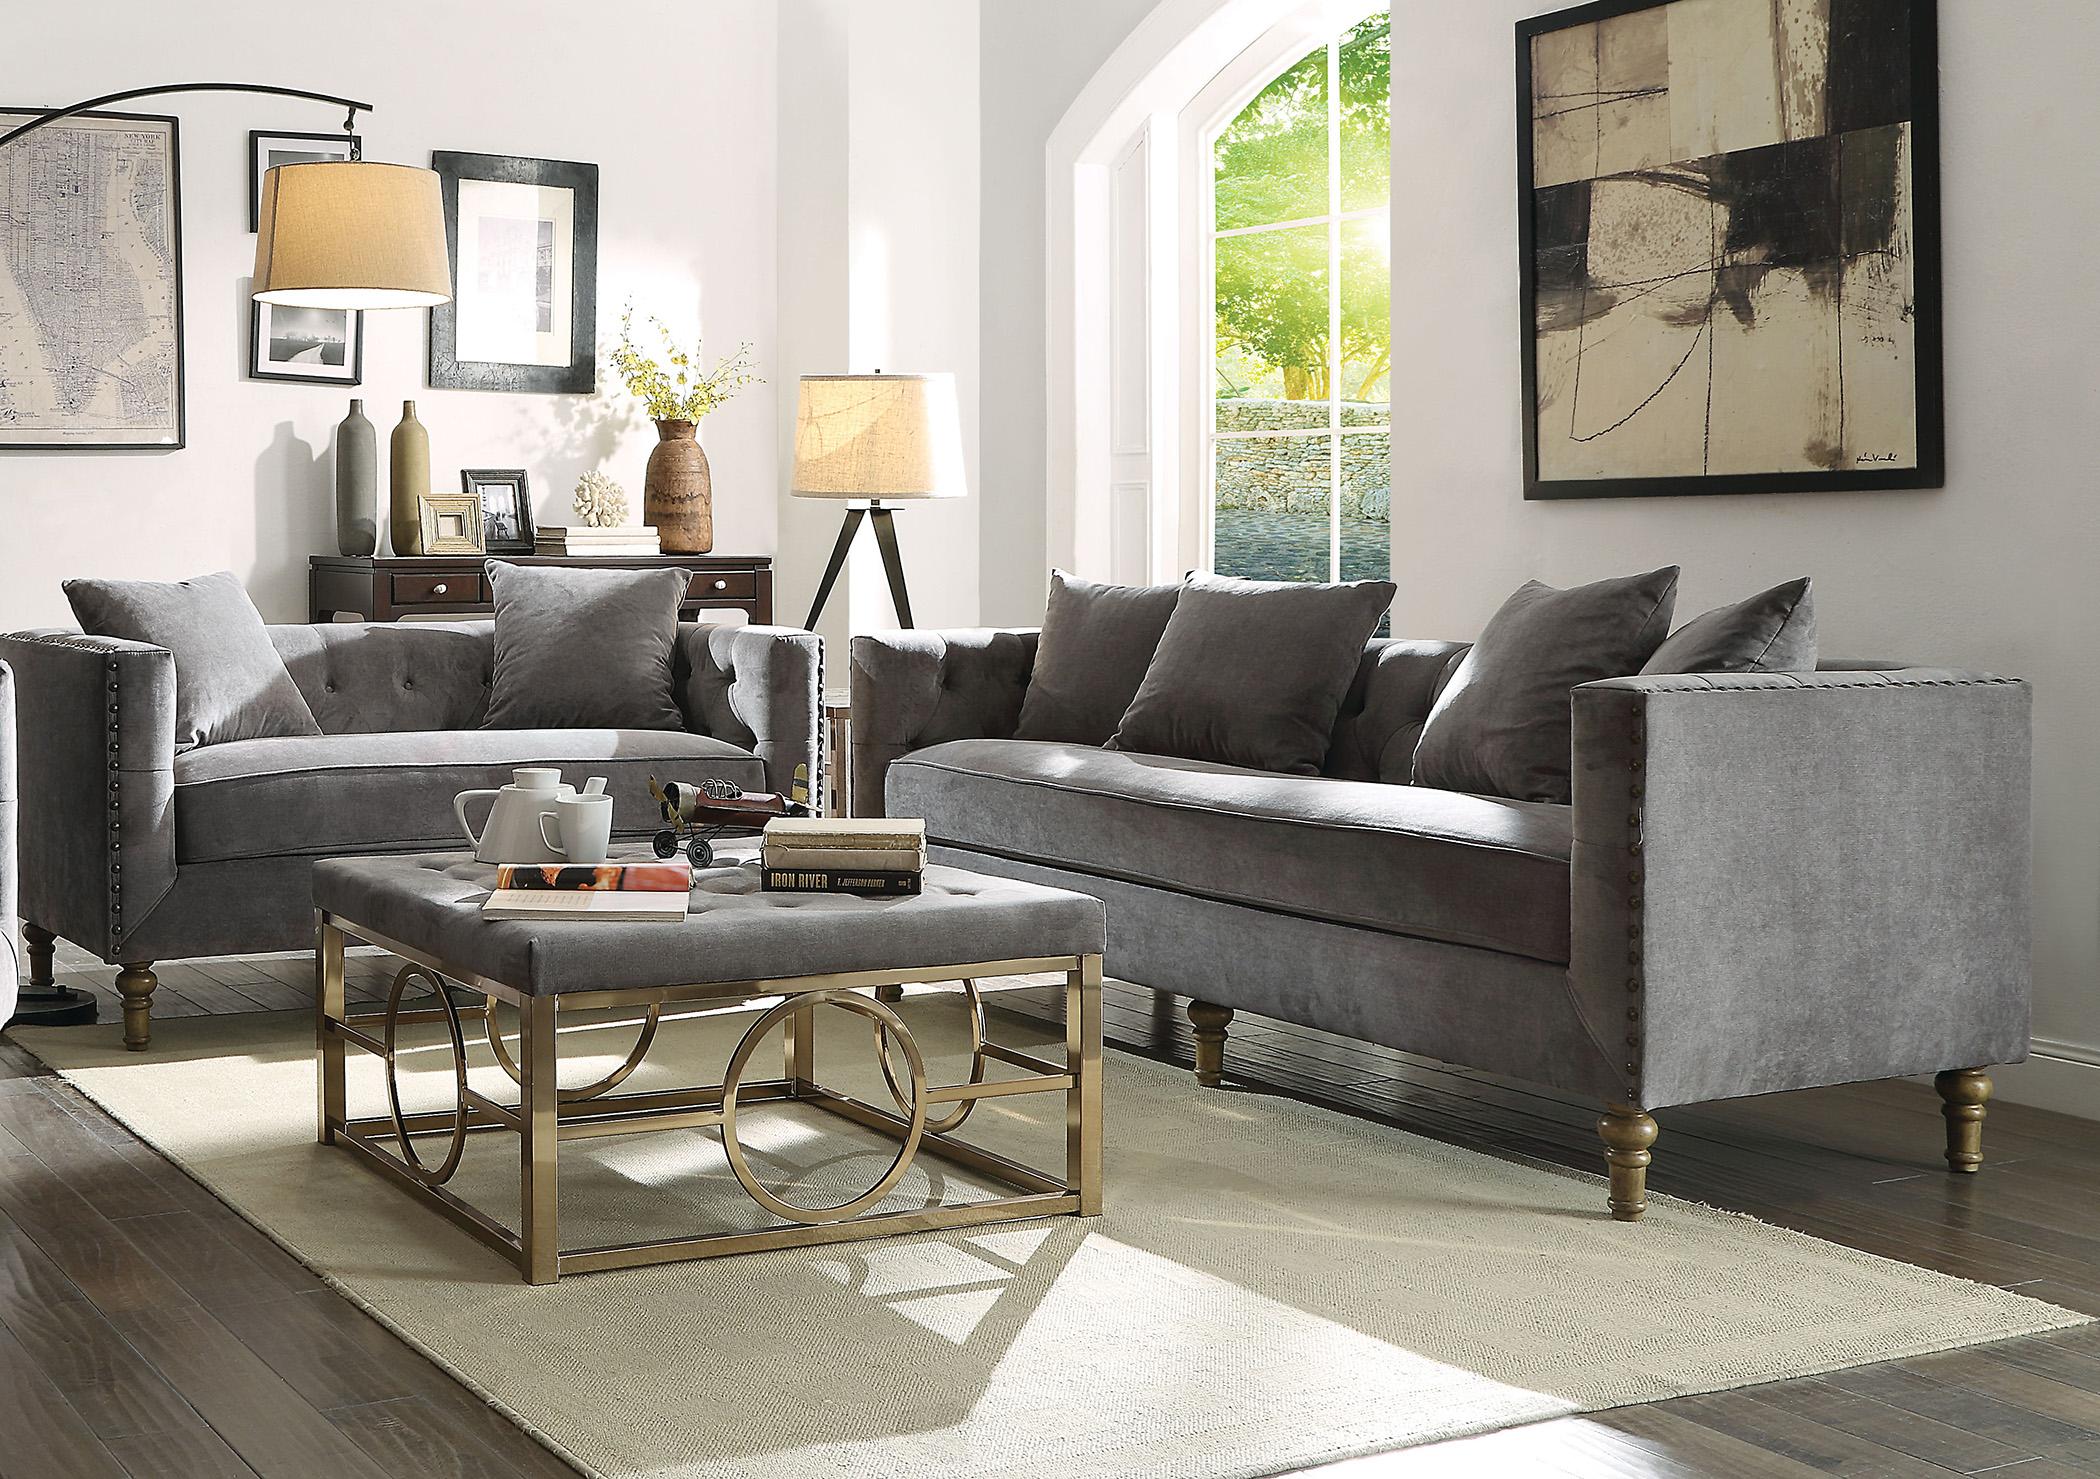 Contemporary, Classic Sofa and Loveseat Set Sidonia Sidonia-53580-Set-2 in Gray Fabric